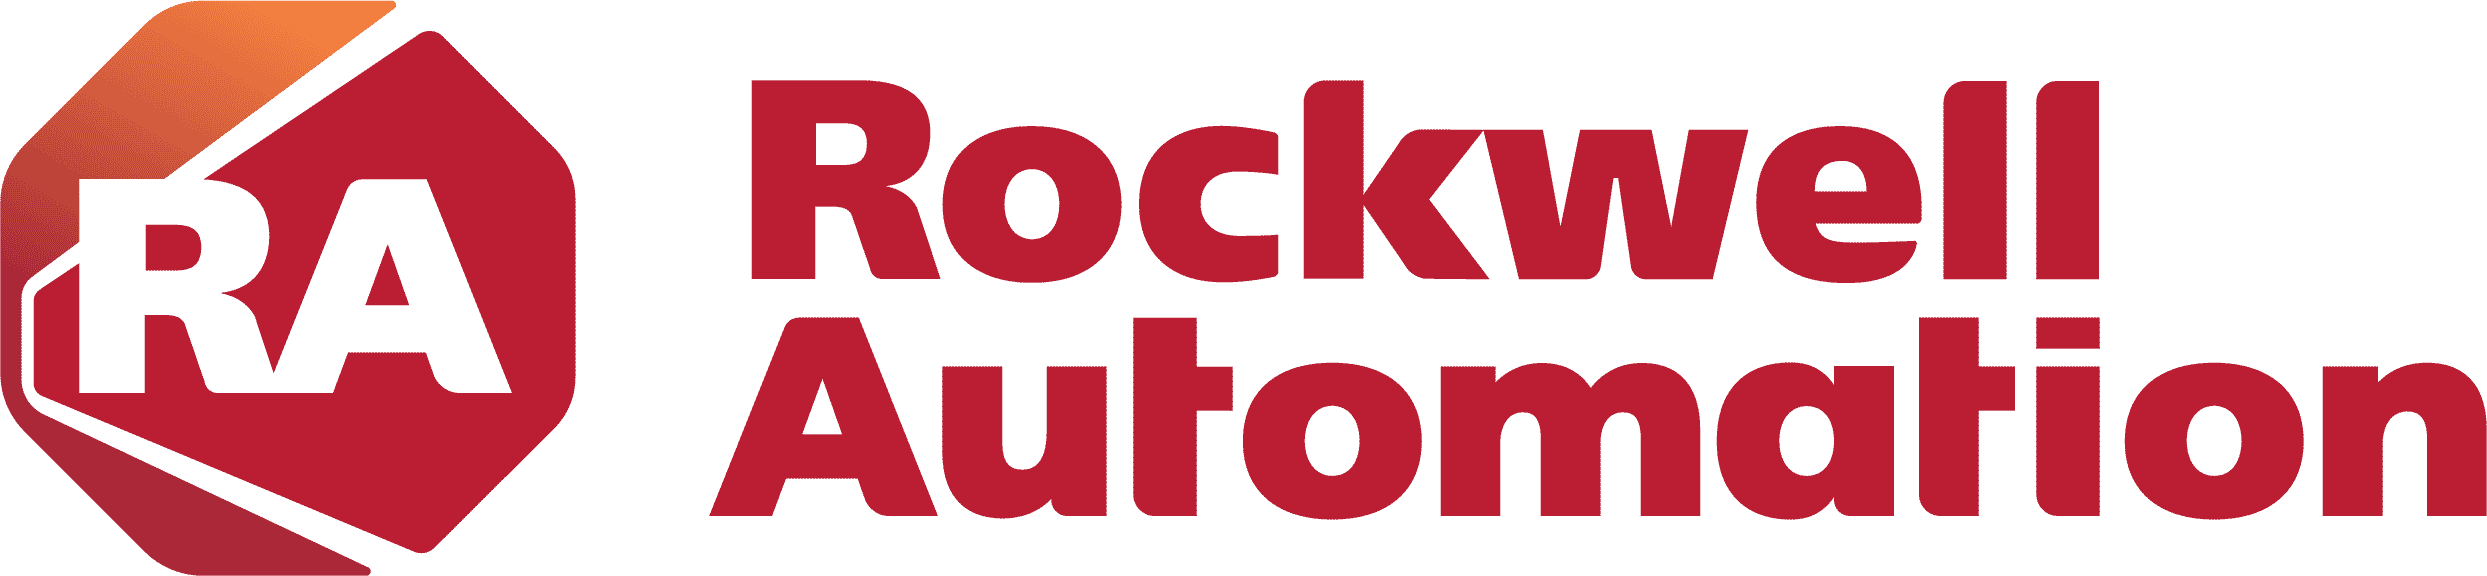 logo rockwell automation